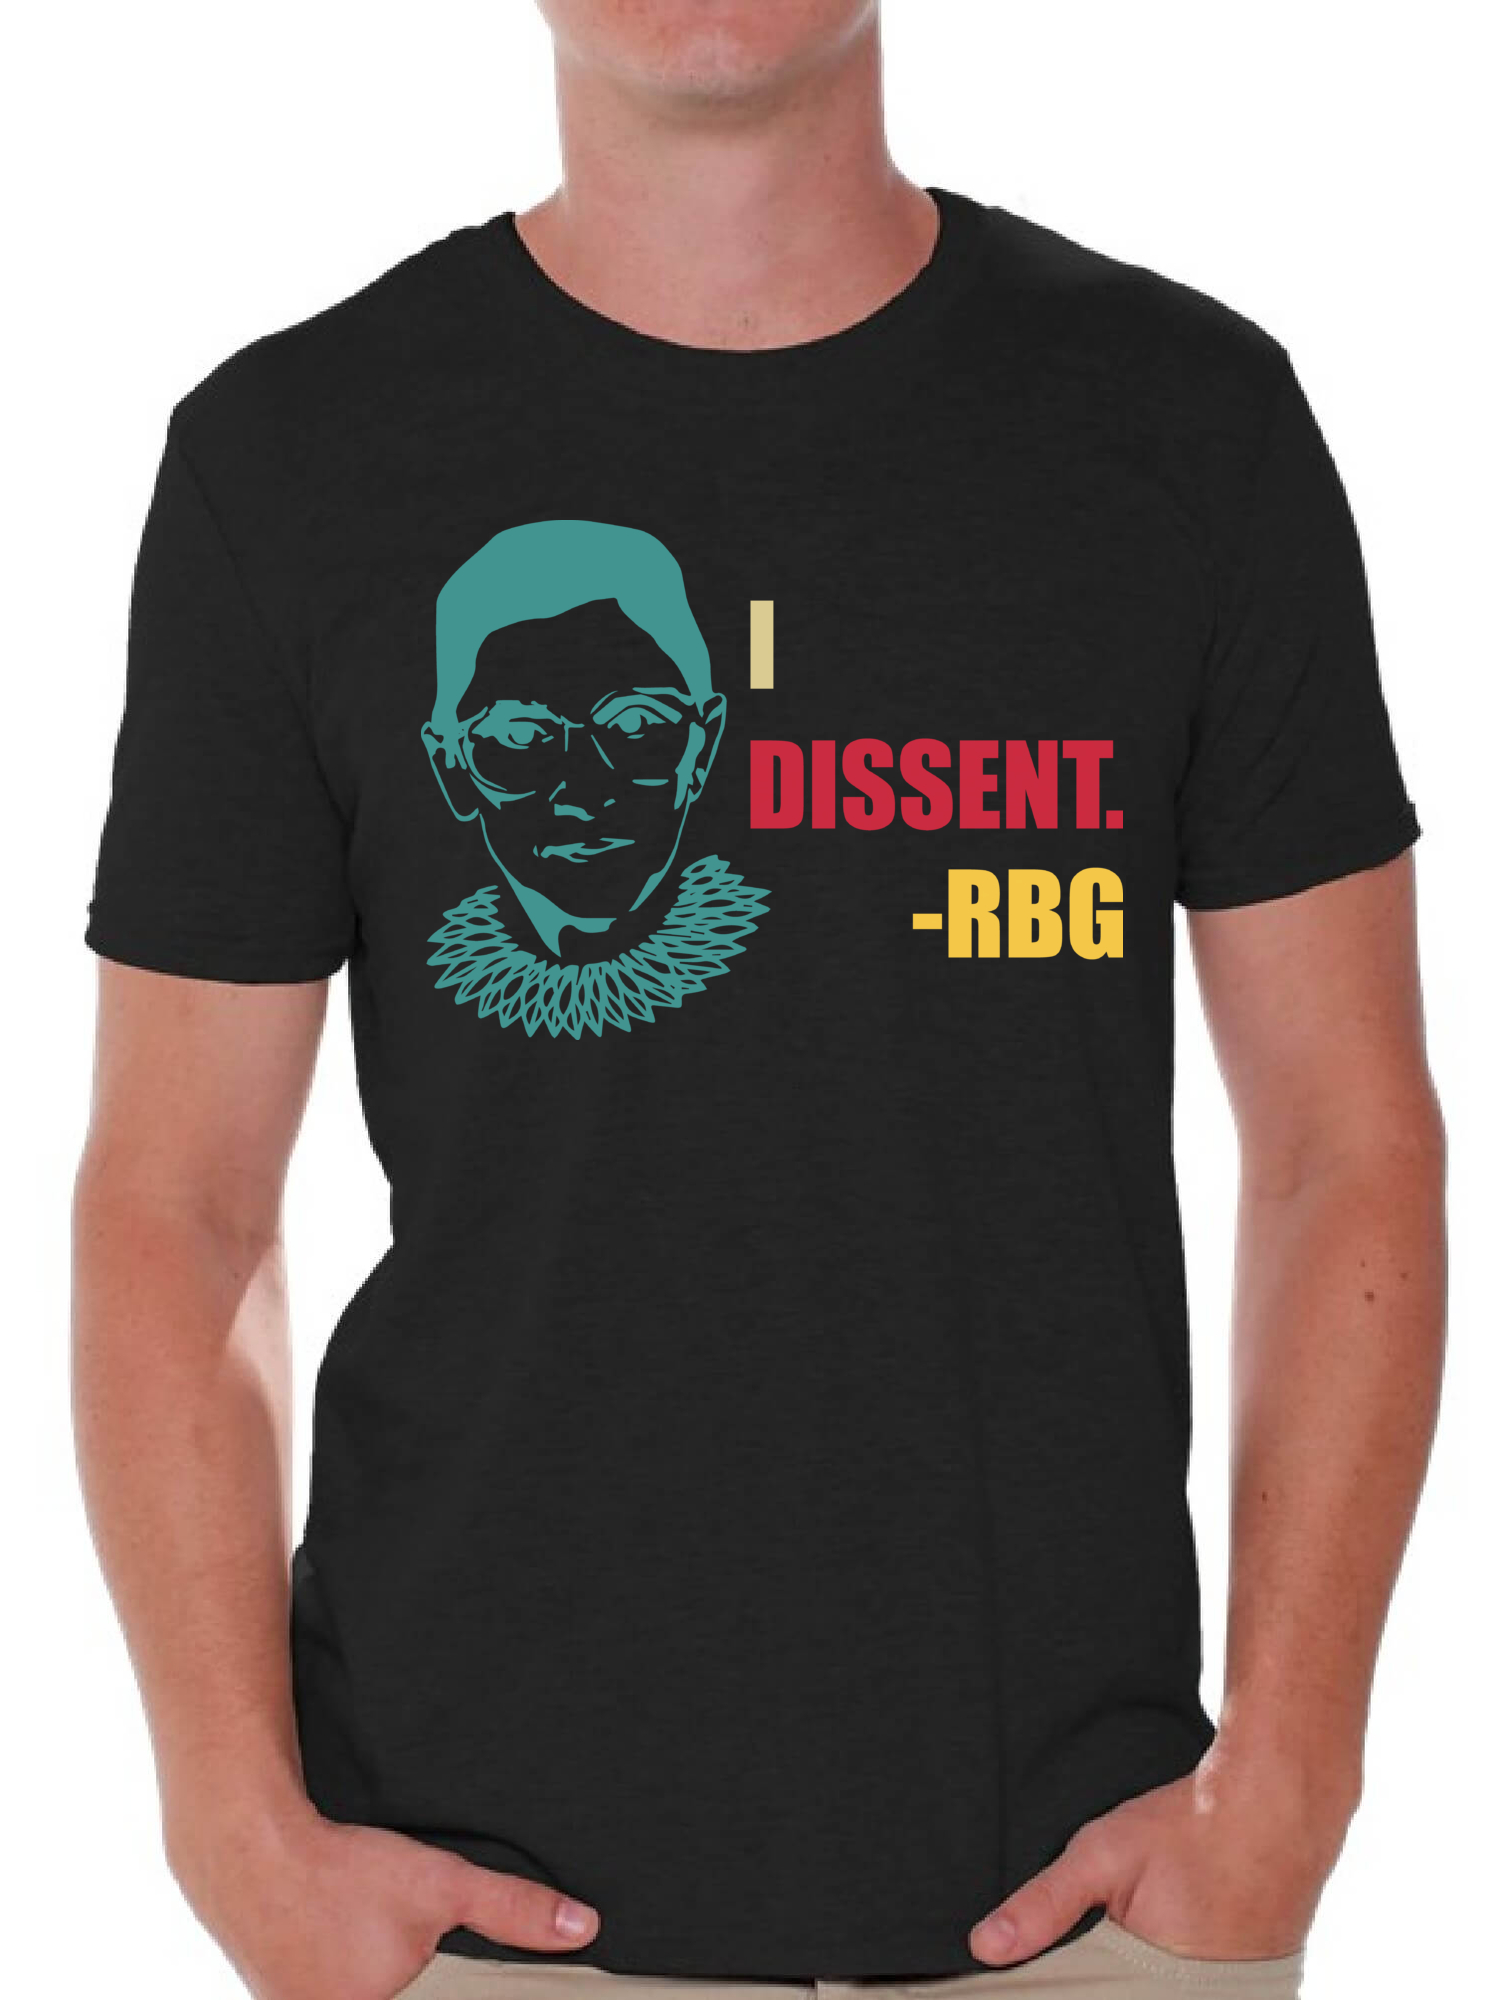 Awkward Styles Ruth Bader Ginsburg Shirt for Men Dissent RBG Notorious Shirt RBG T Shirt Mens Support Women Empowerment T-shirt - image 1 of 4